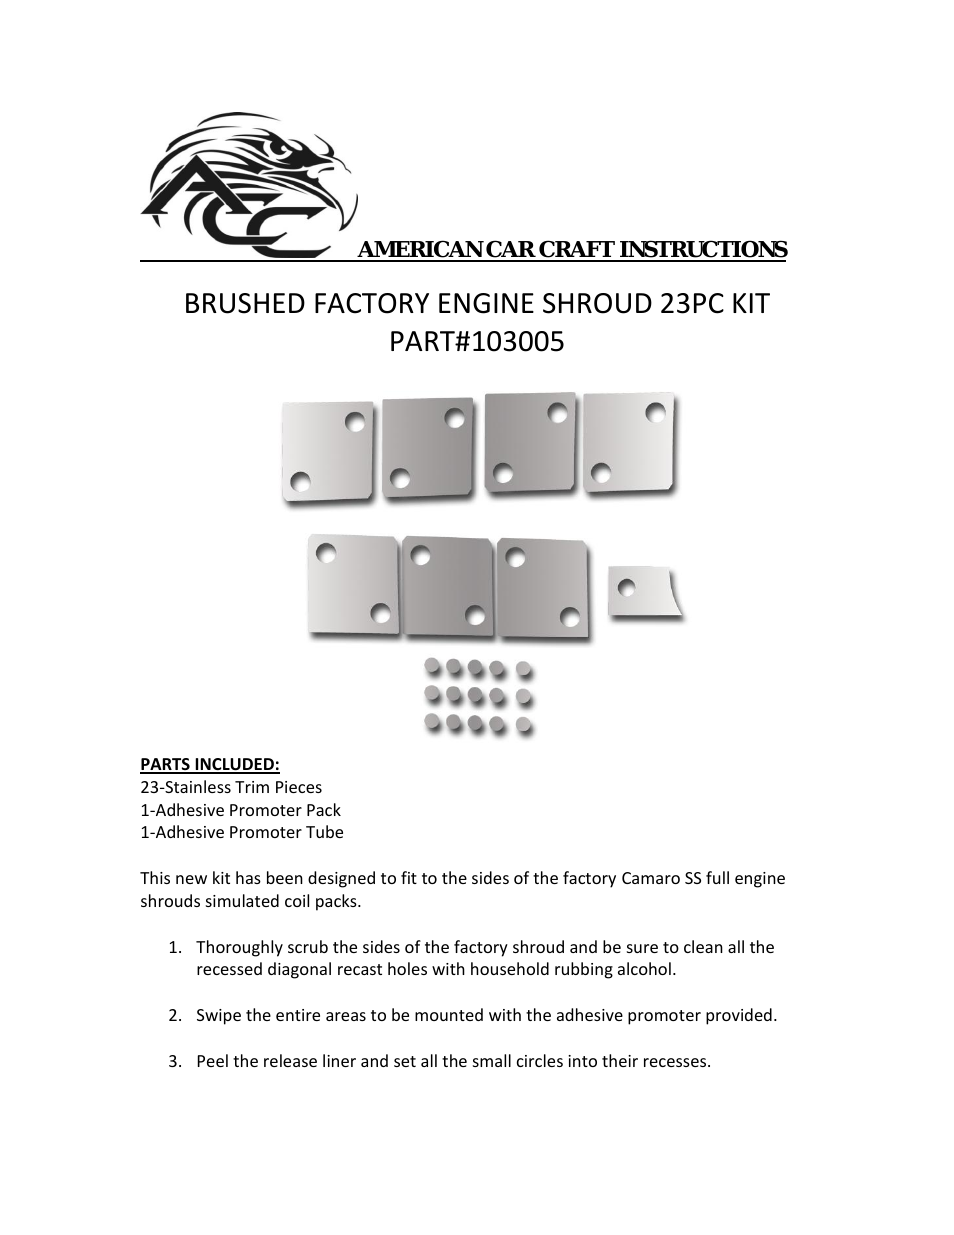 Camaro Factory Shroud Trim Brushed Side Kit 23Pc 2010-2013